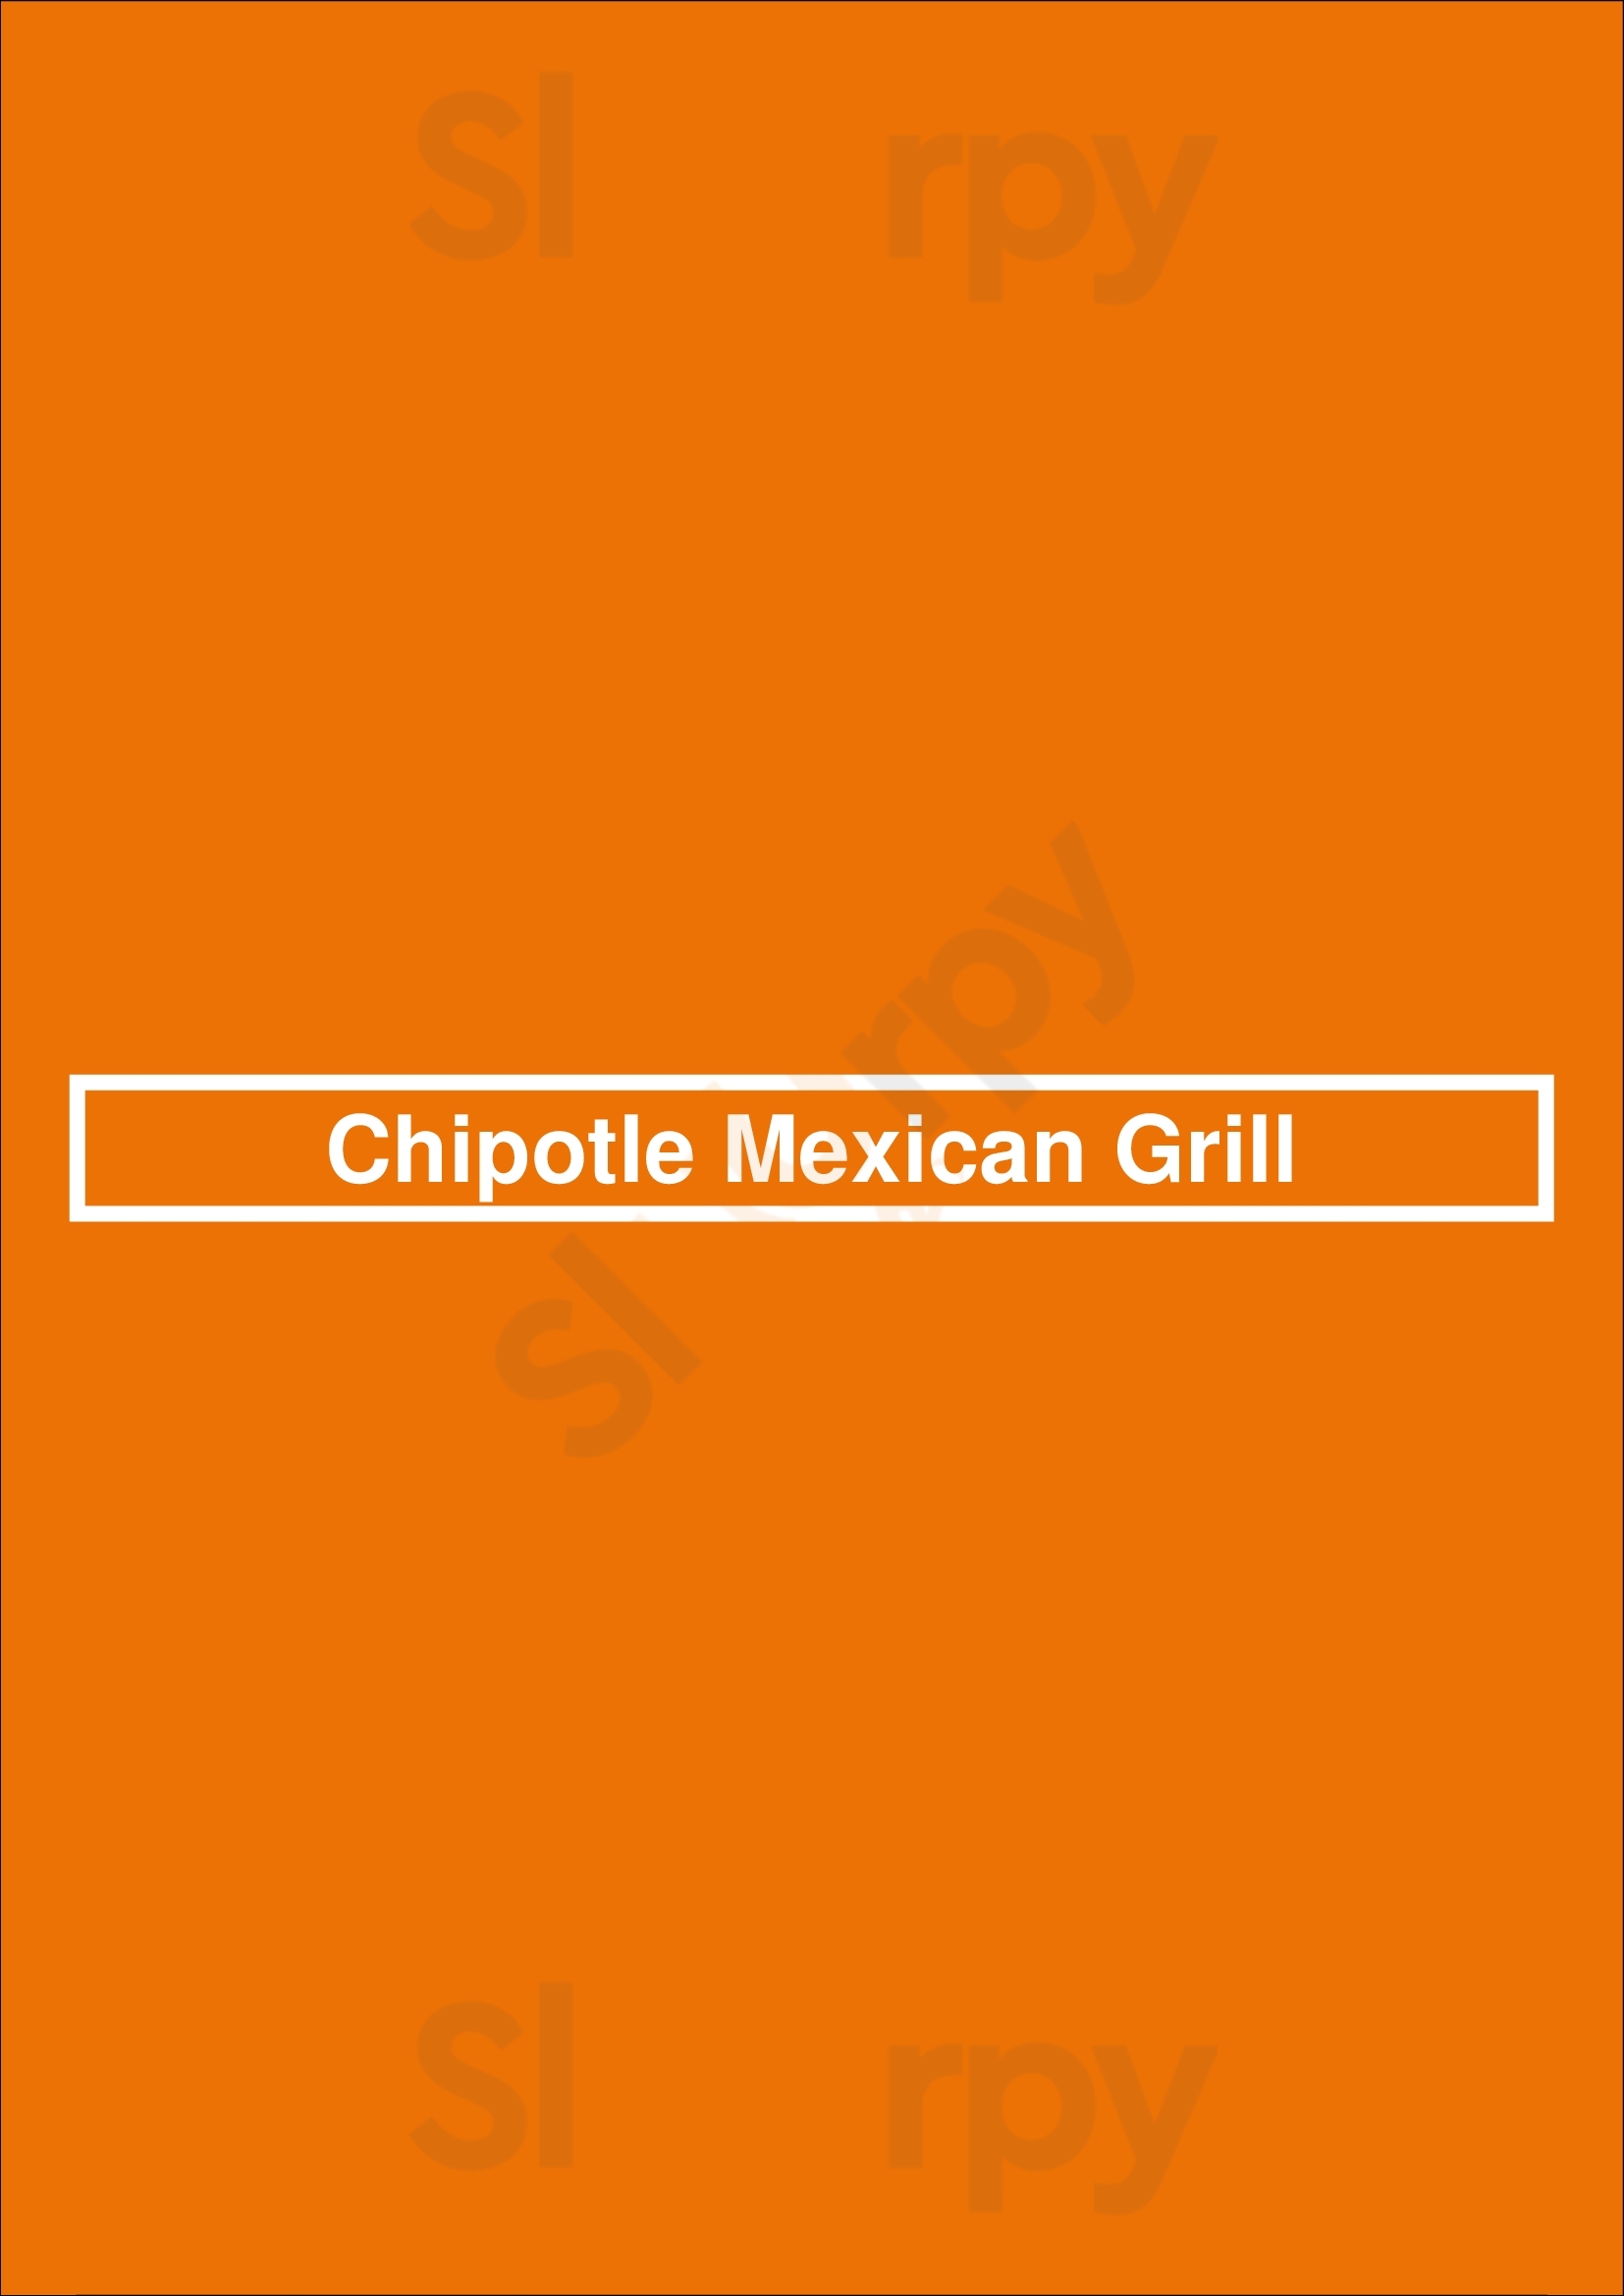 Chipotle Mexican Grill Toronto Menu - 1